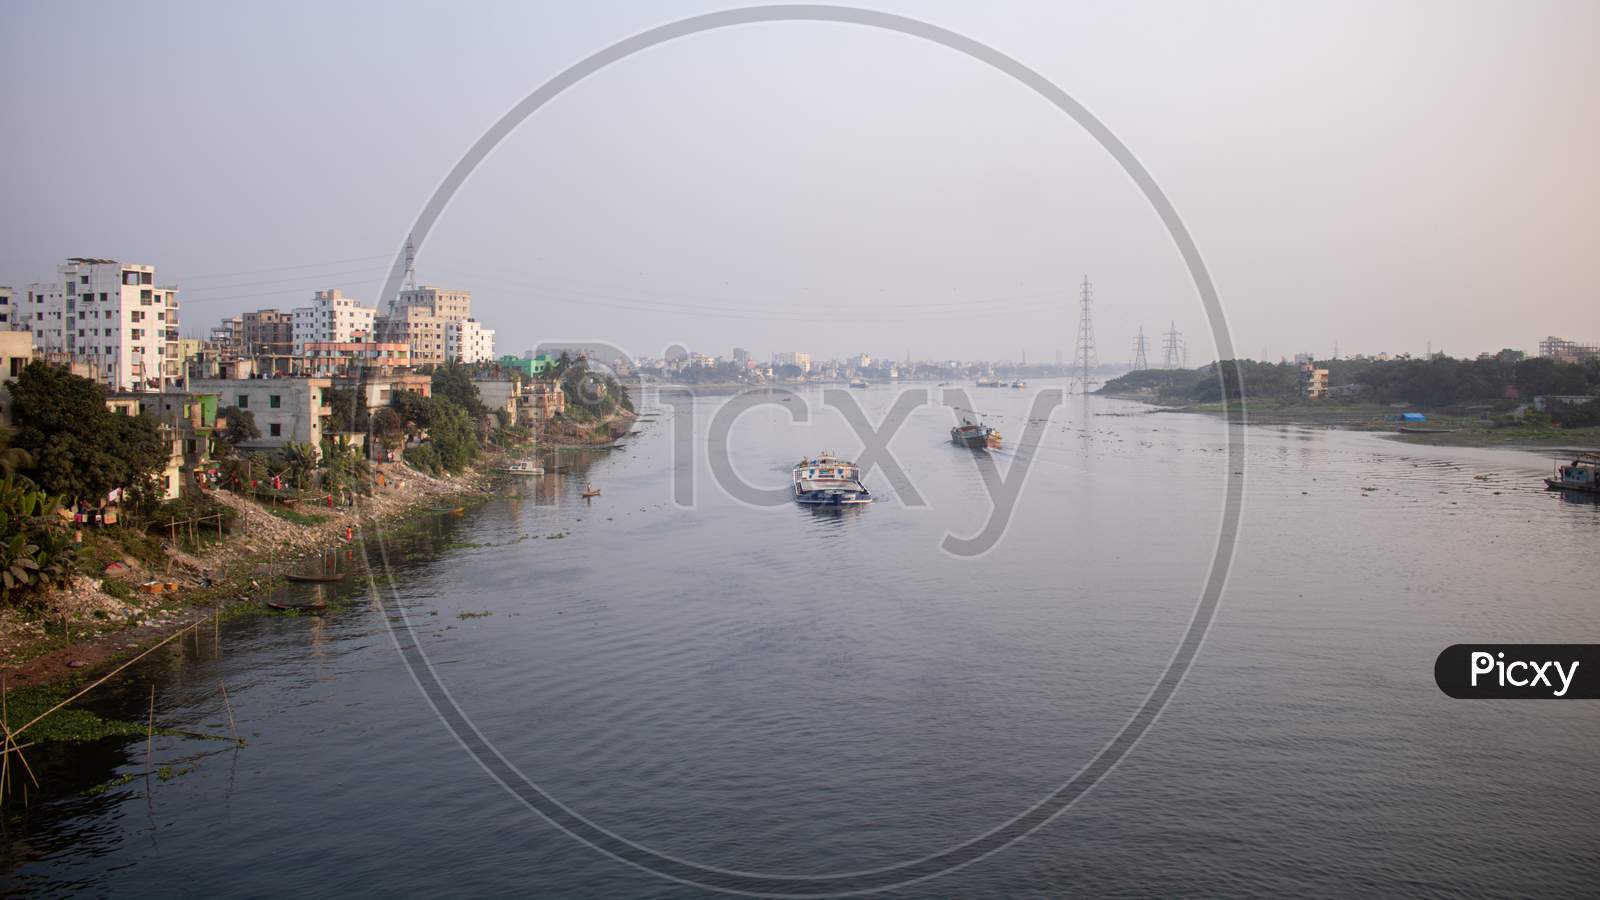 Picture Of Dhaka City On The Banks Of River Buriganga.The River Buriganga Has Enhanced The Beauty Of The Capital City Dhaka.